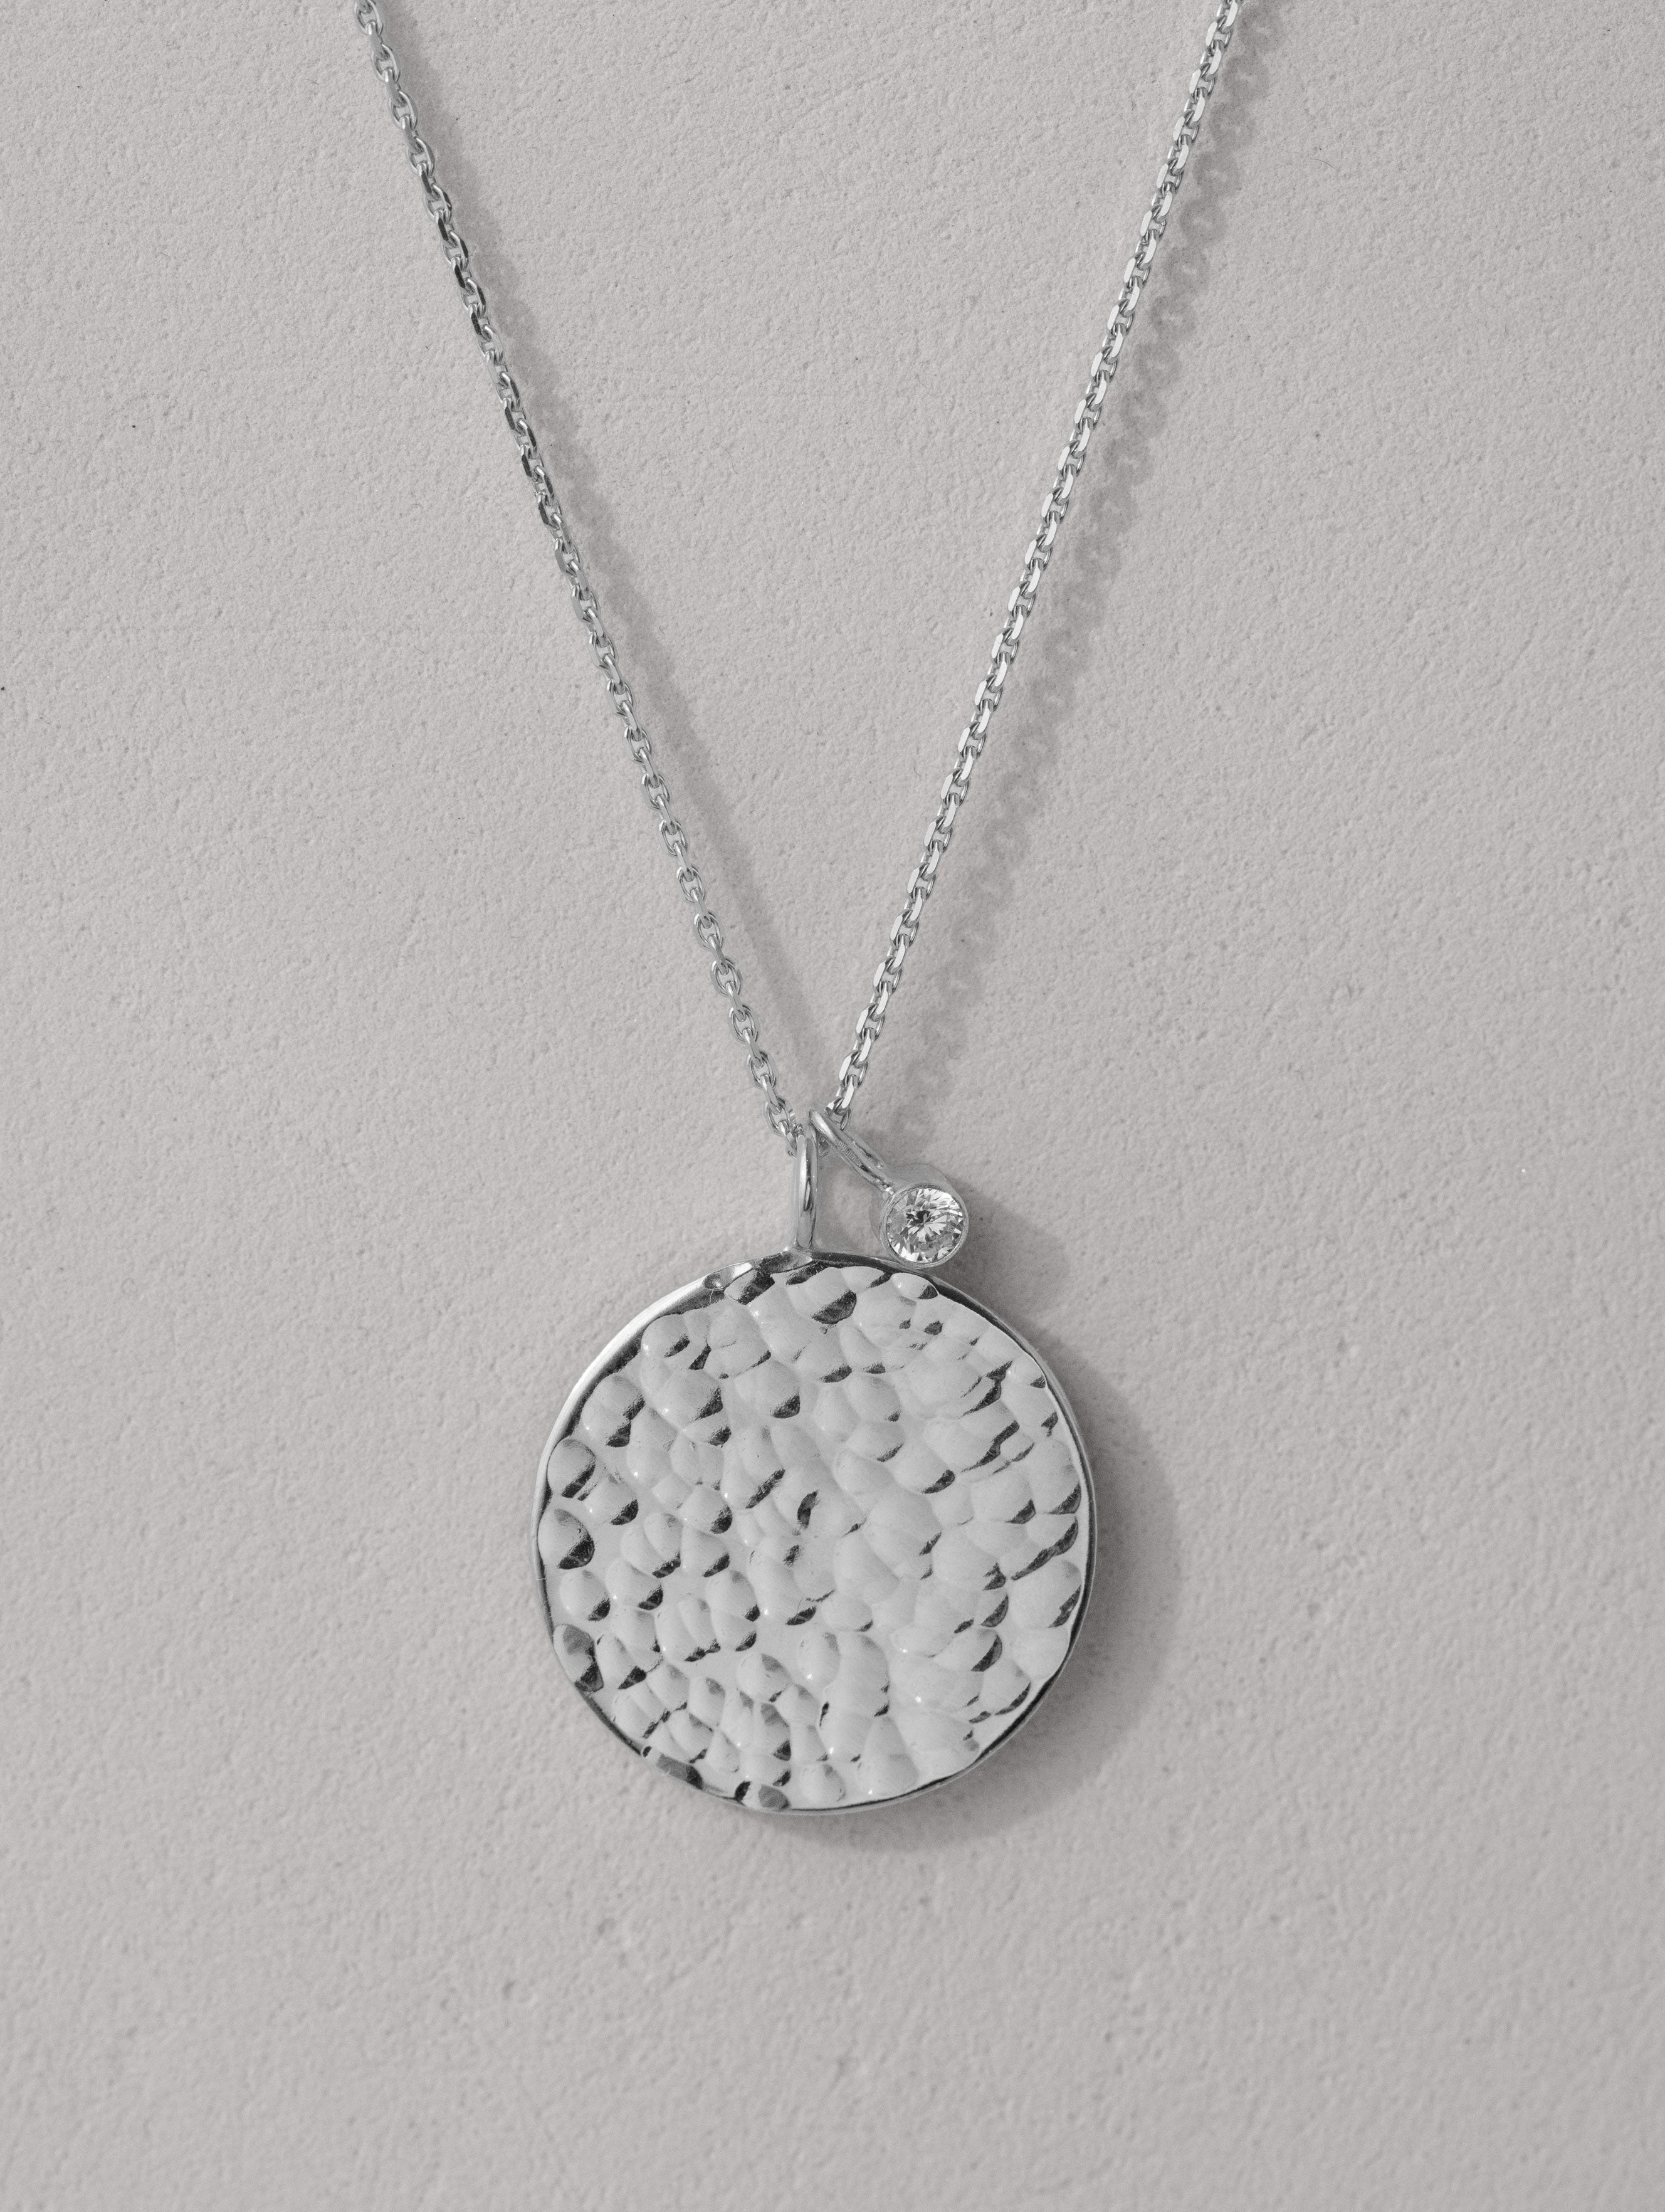 Shape Necklace with stone - Round Large